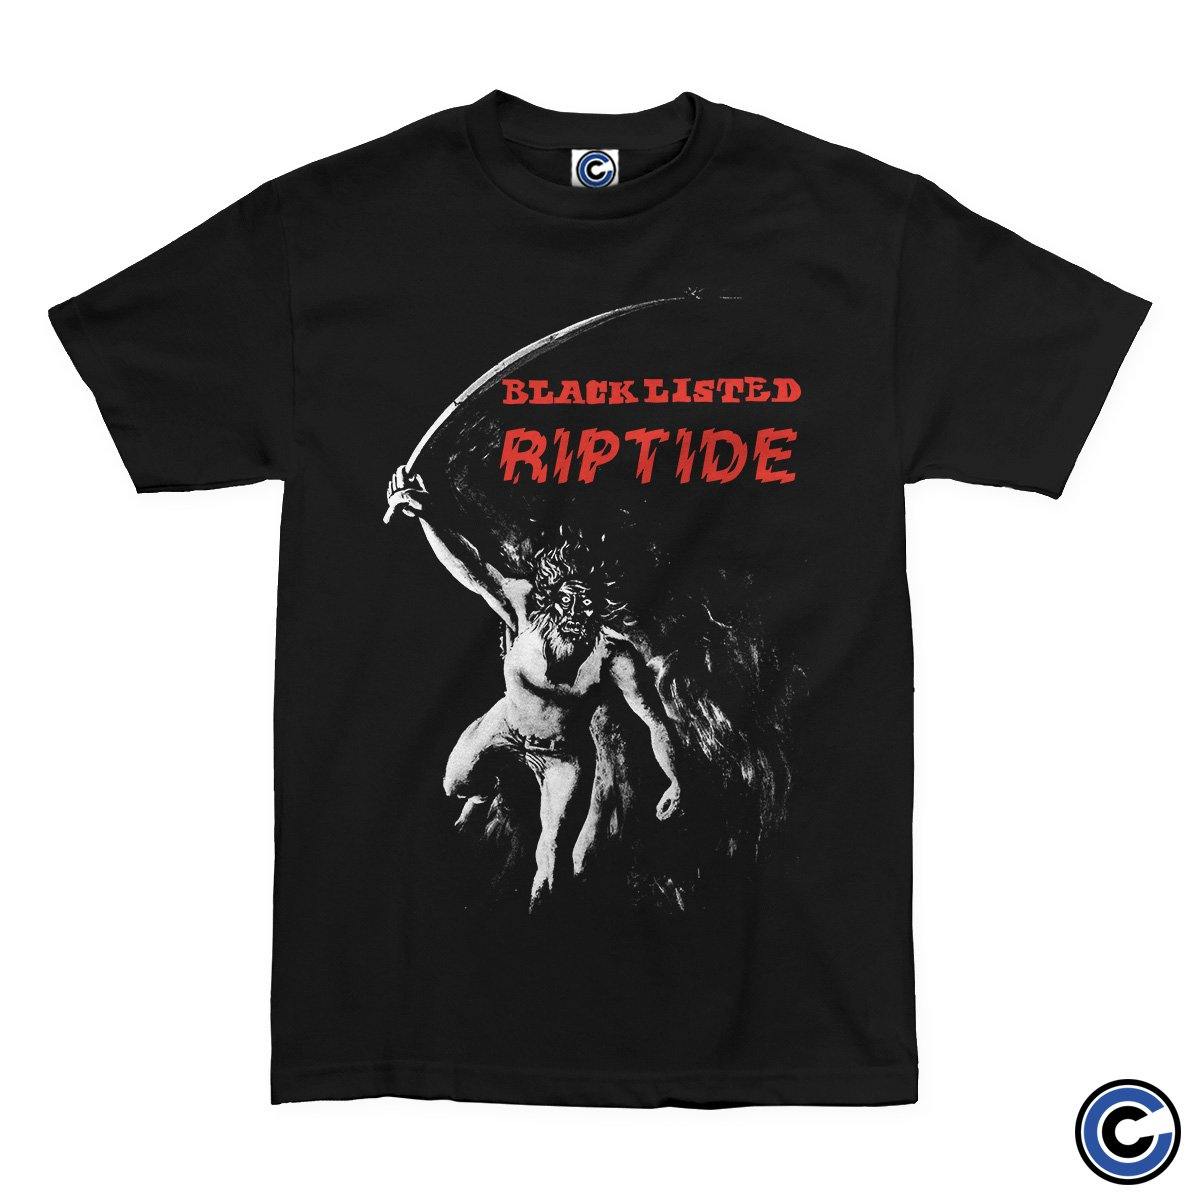 Buy – Blacklisted "Riptide" Shirt – Band & Music Merch – Cold Cuts Merch